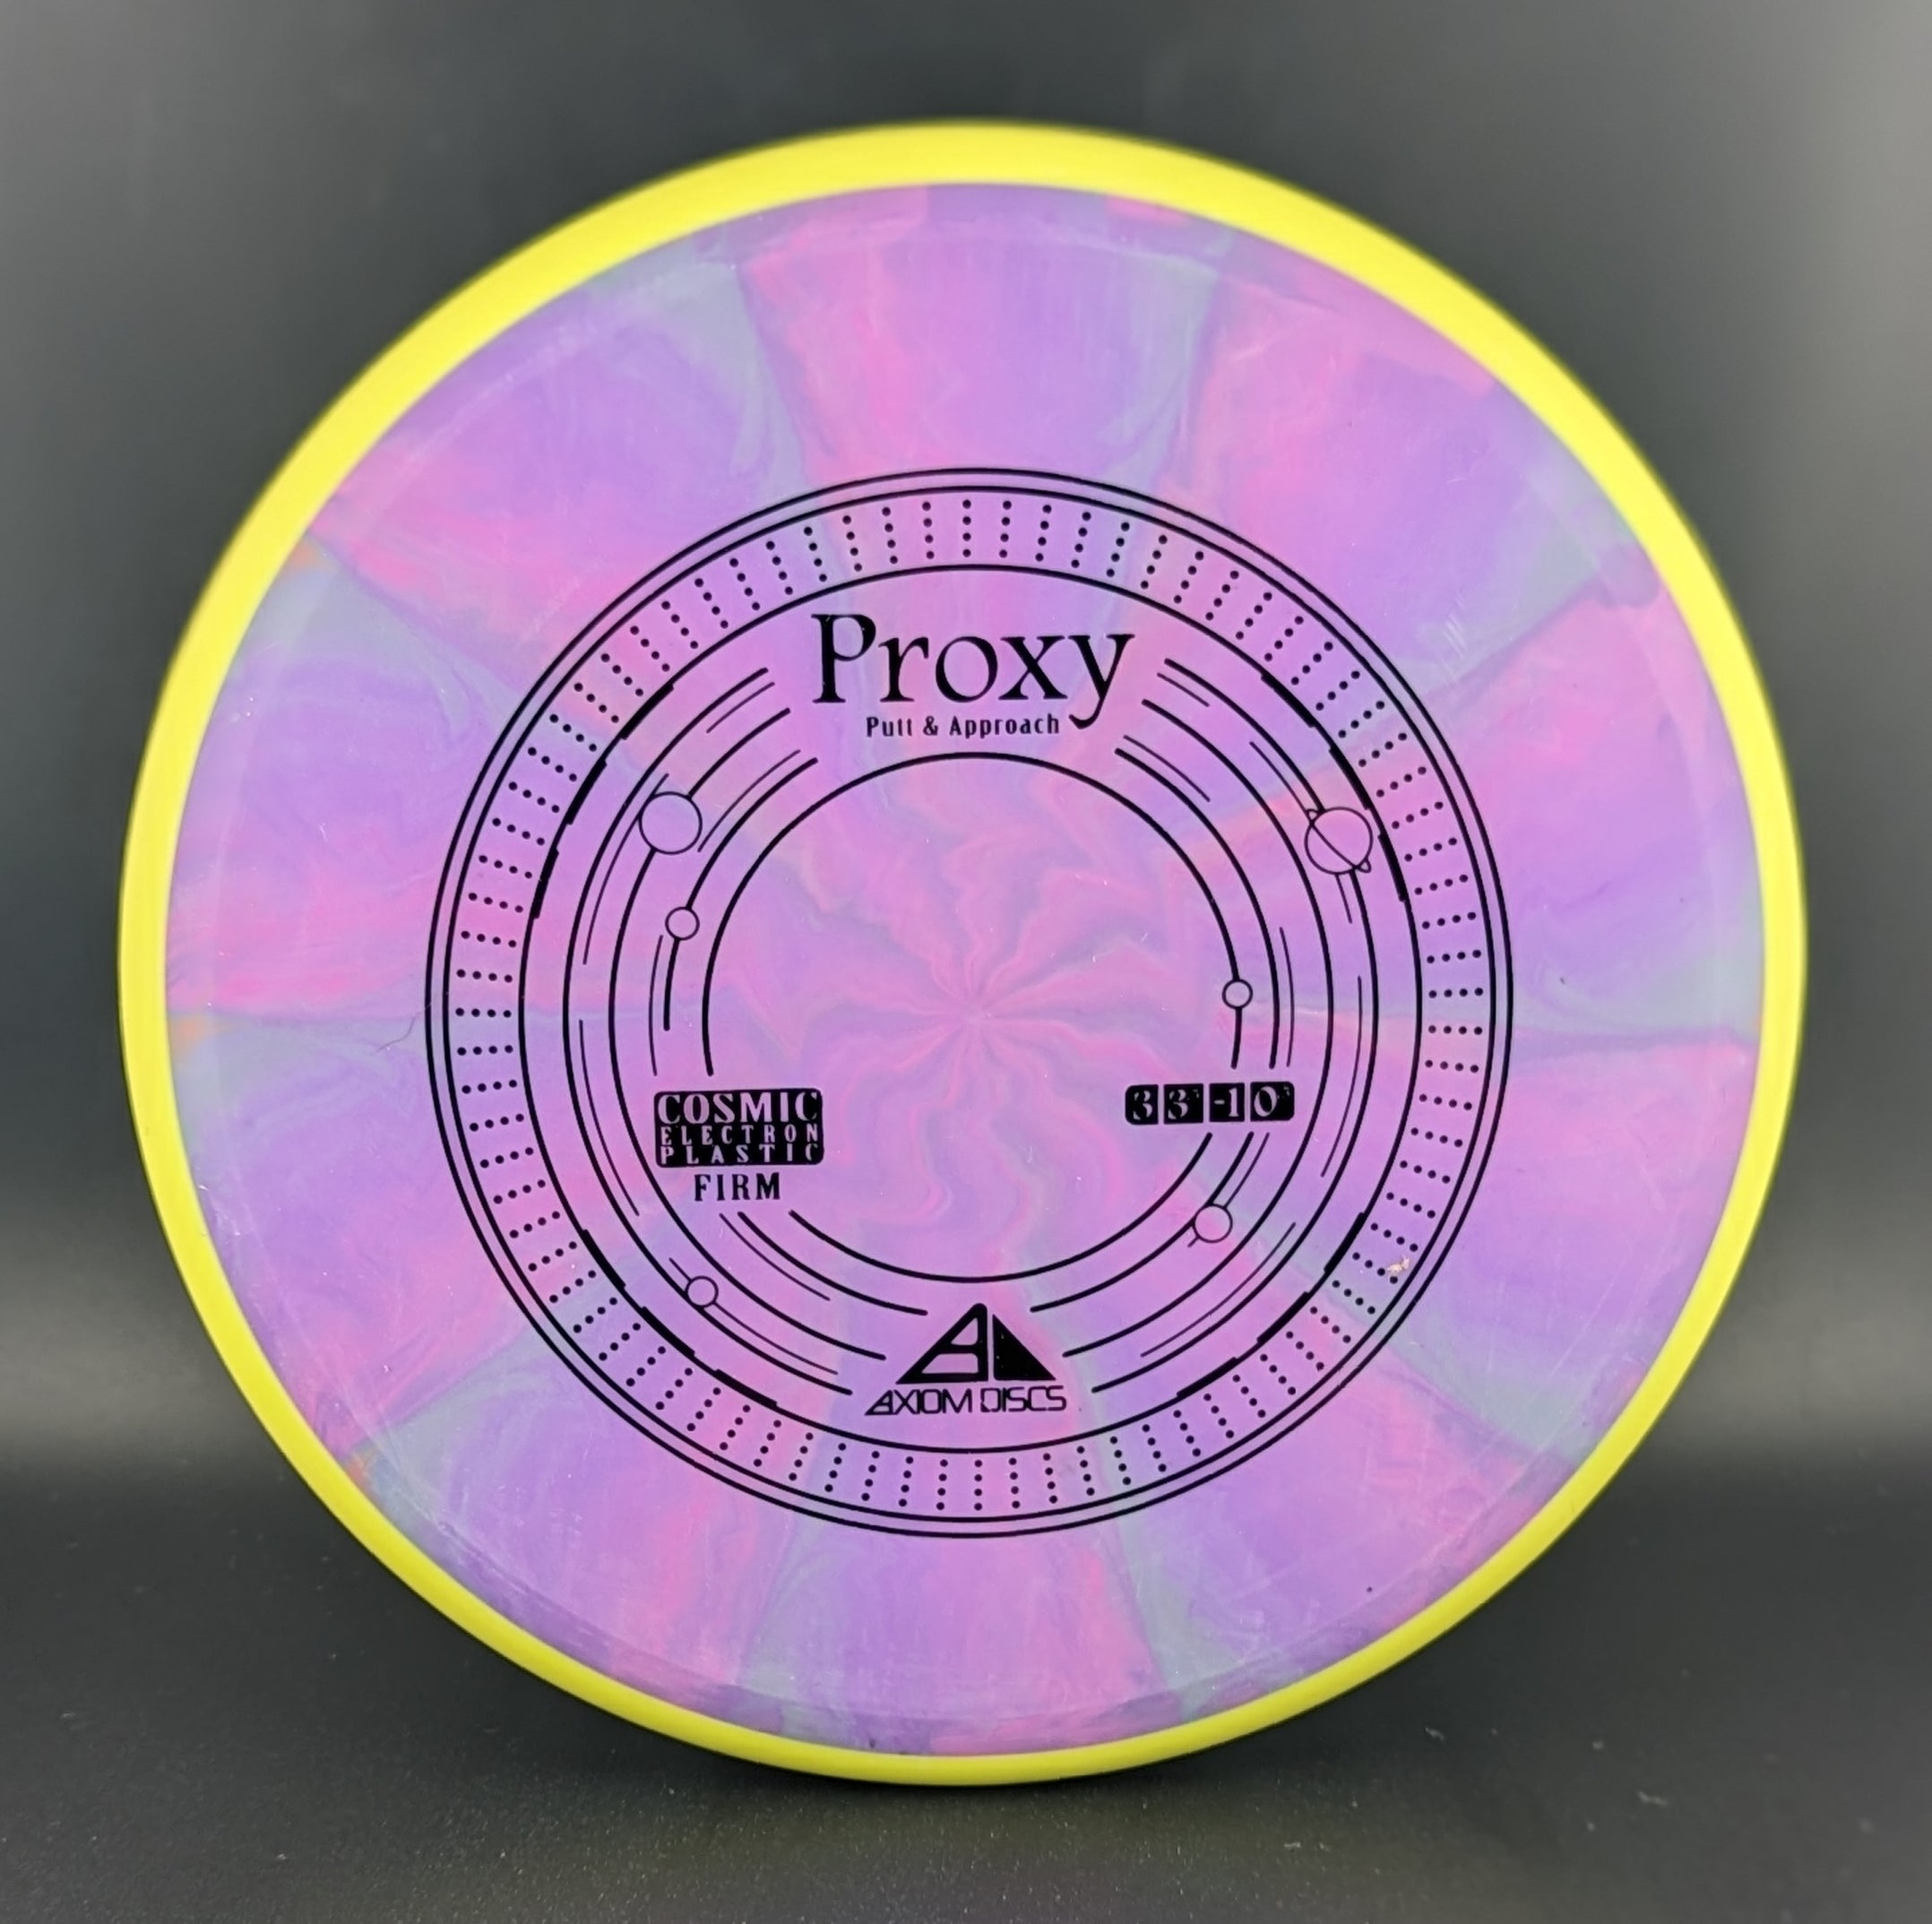 Axiom Cosmic Electron Proxy Firm - 0